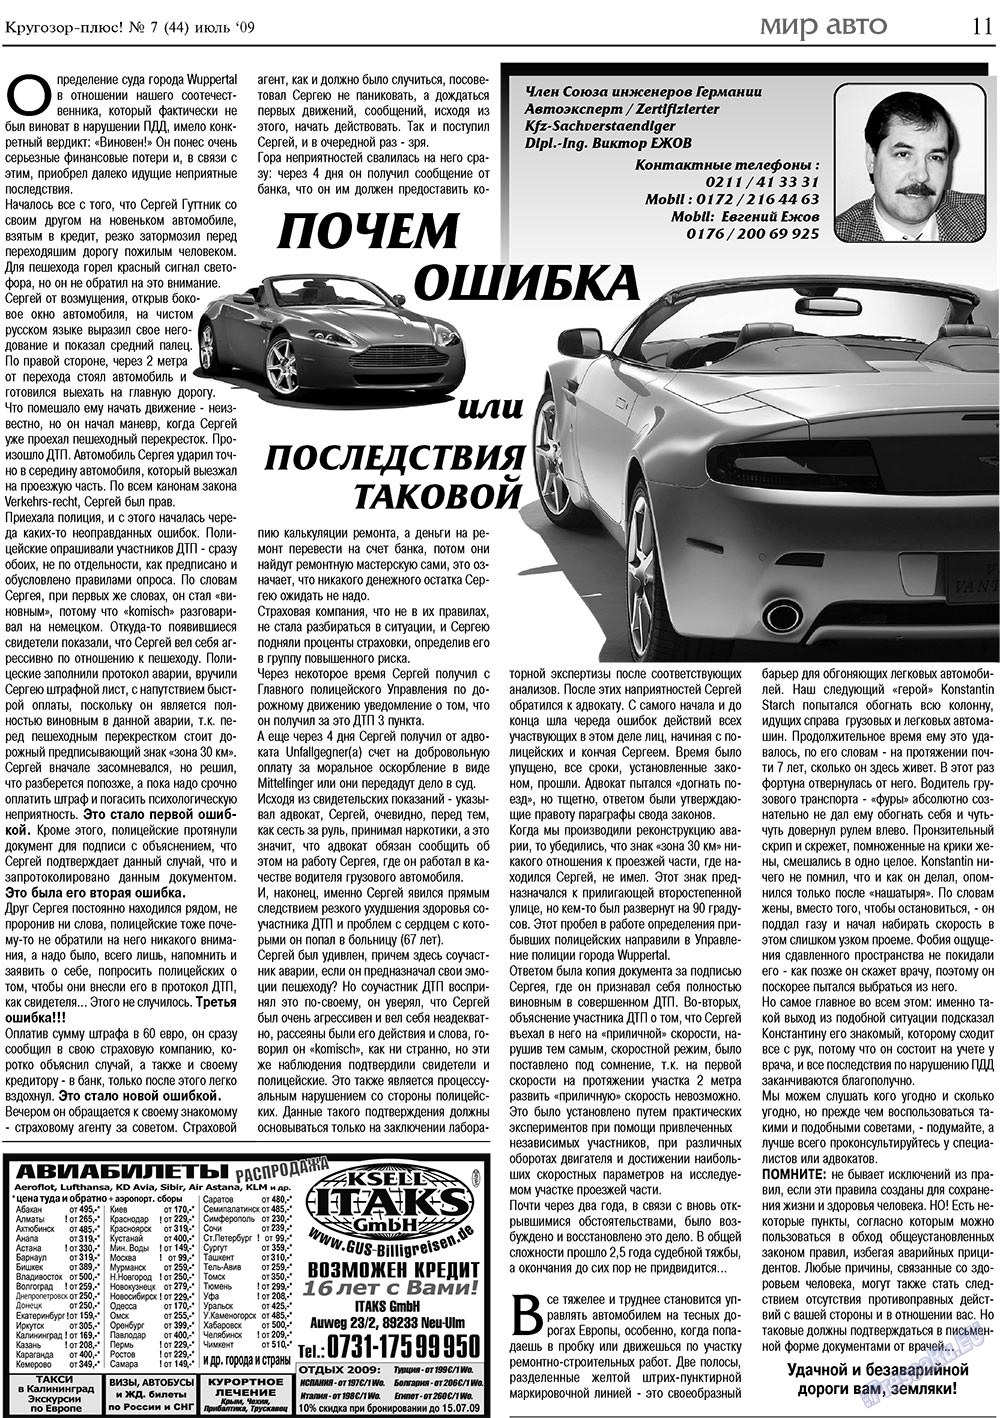 Кругозор плюс! (газета). 2009 год, номер 7, стр. 11